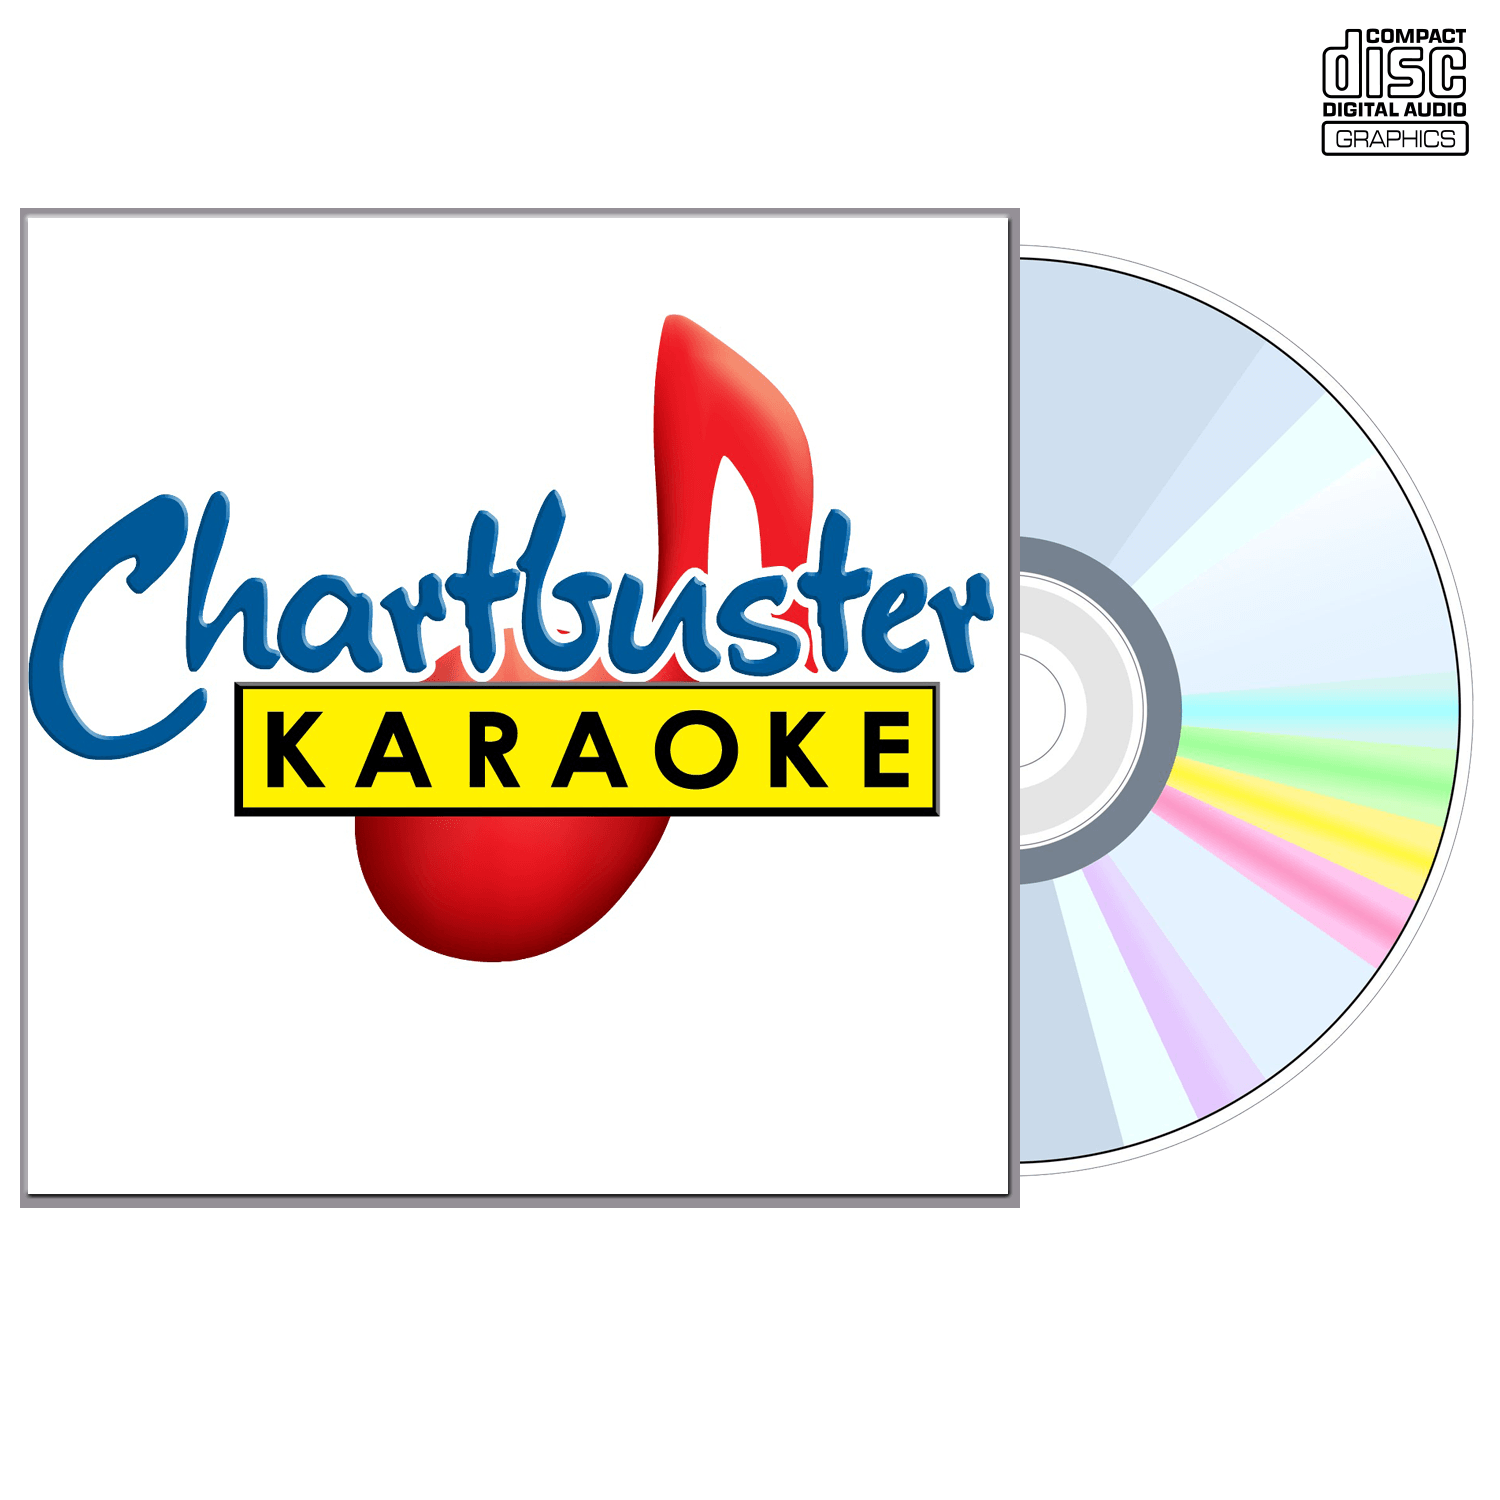 Best Of Alabama - CD+G - Chartbuster Karaoke - Karaoke Home Entertainment